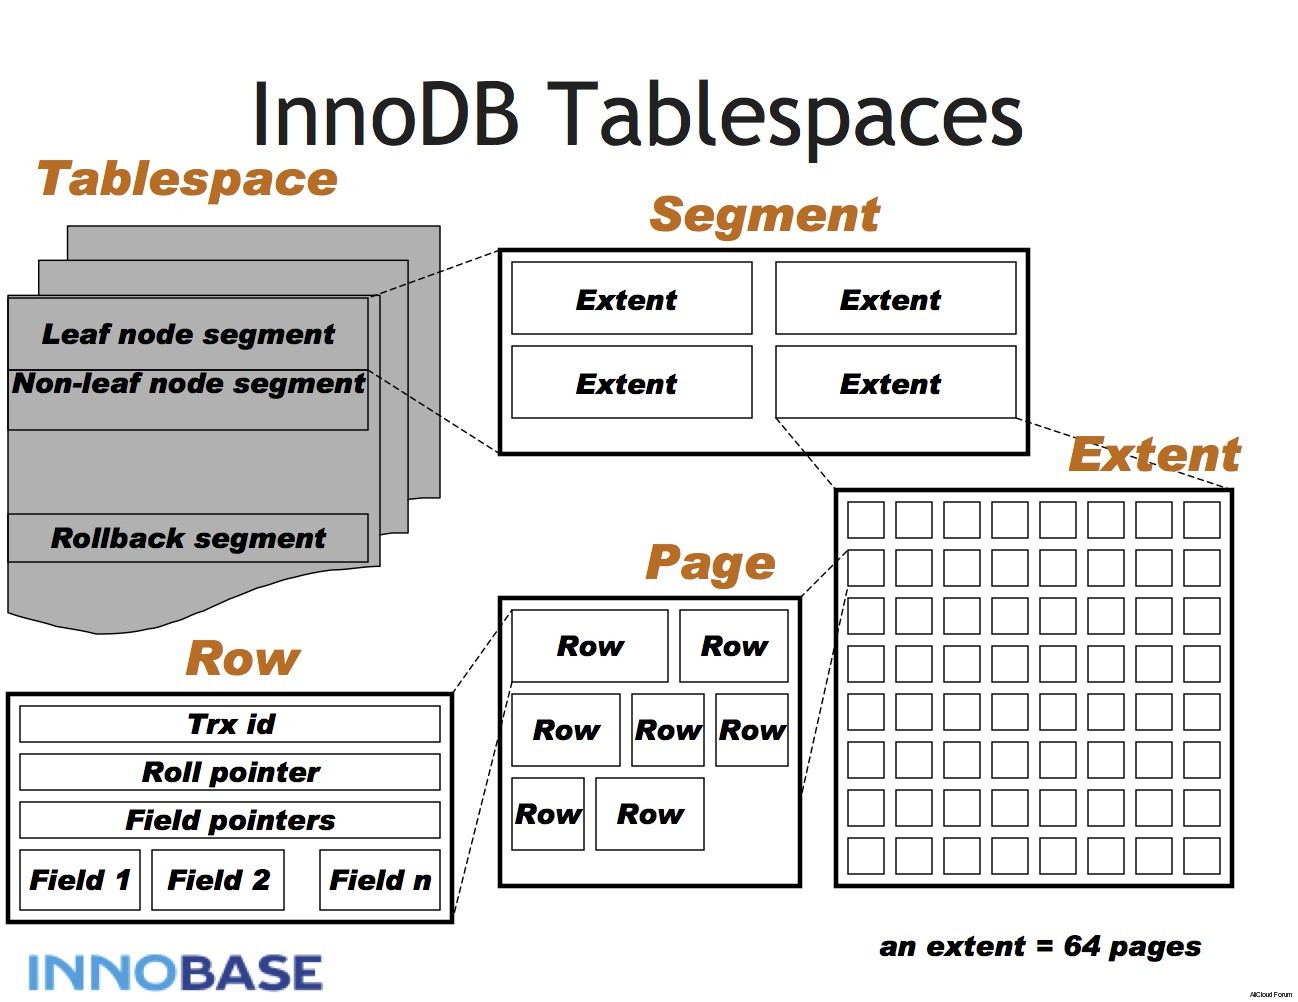 innodb_tablespaces